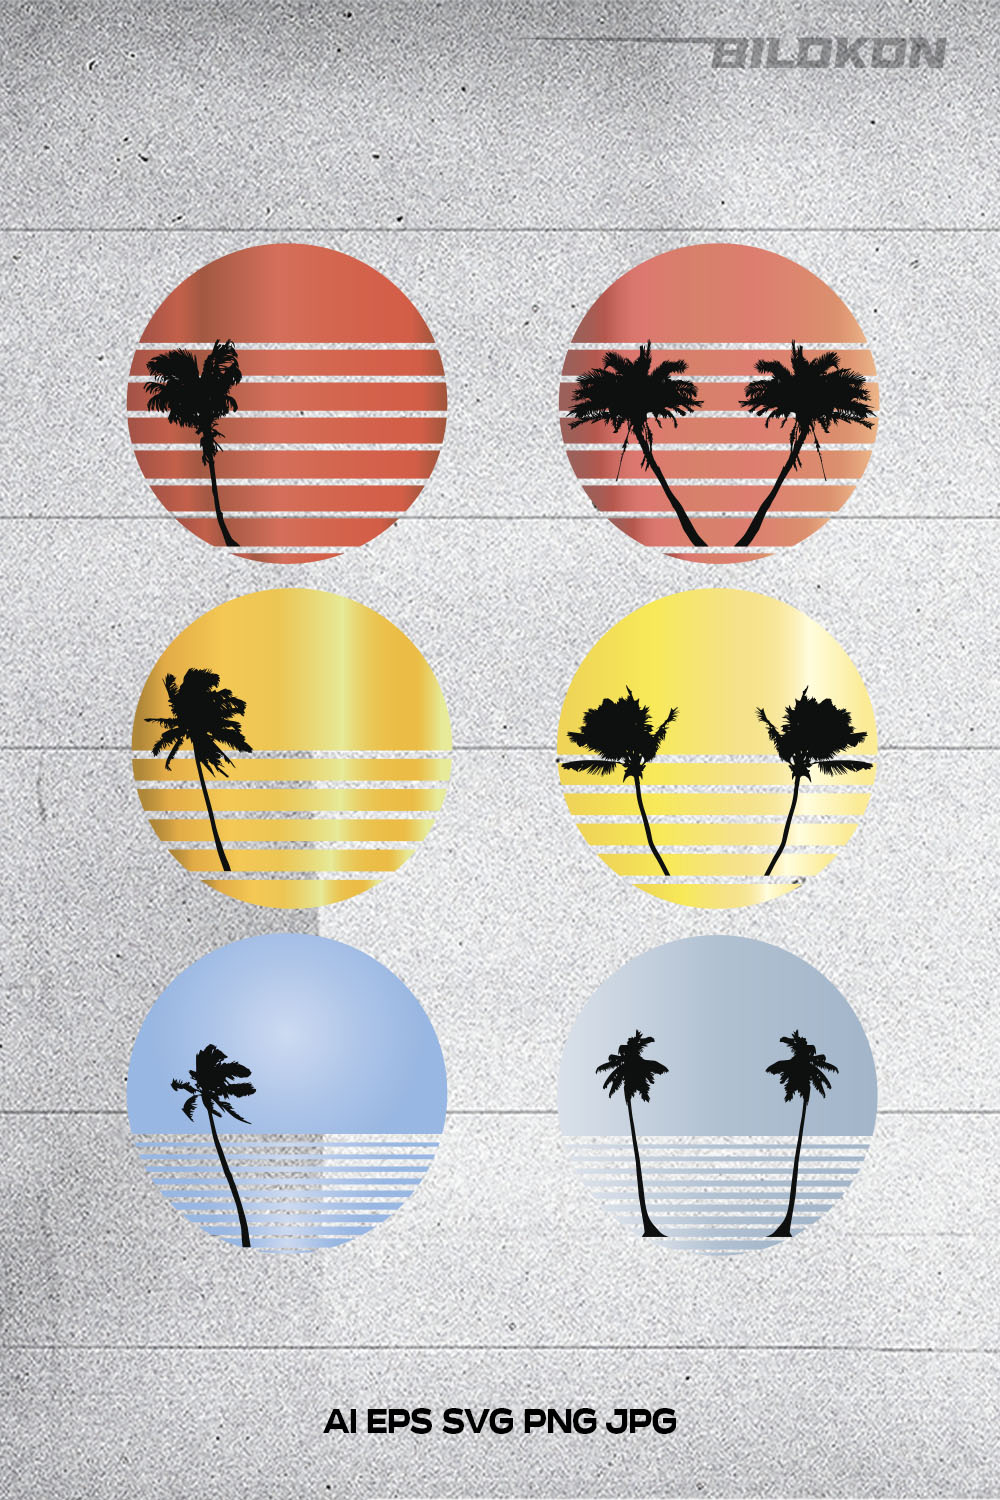 Retro Sunset and Palm Tree Icon Set Design pinterest image.